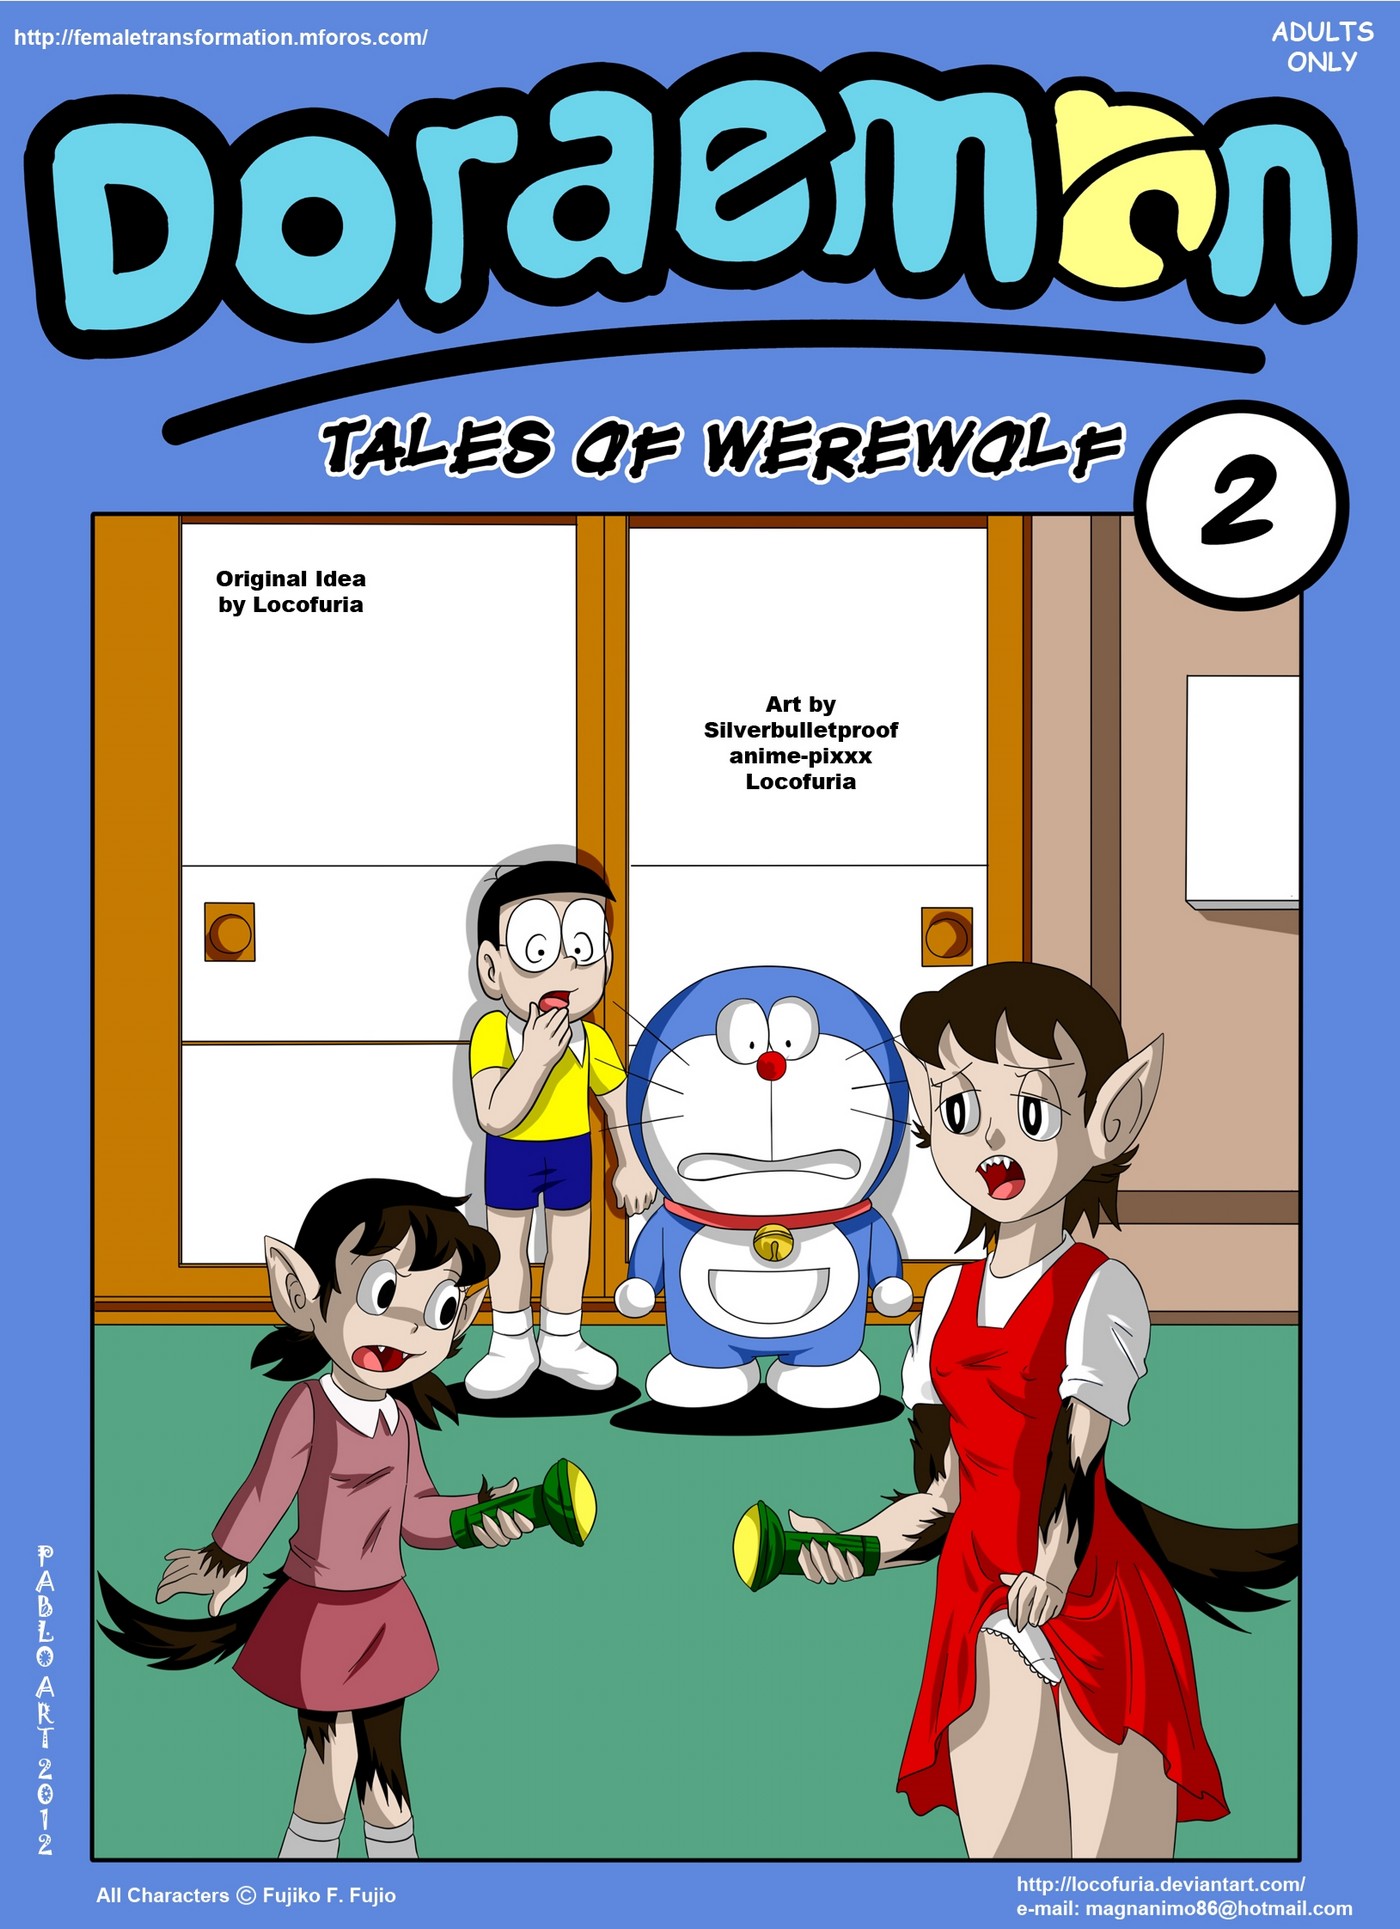 Doraemon Cartoon Sex Video - Doraemon Tales of Werewolf 2 - KingComiX.com